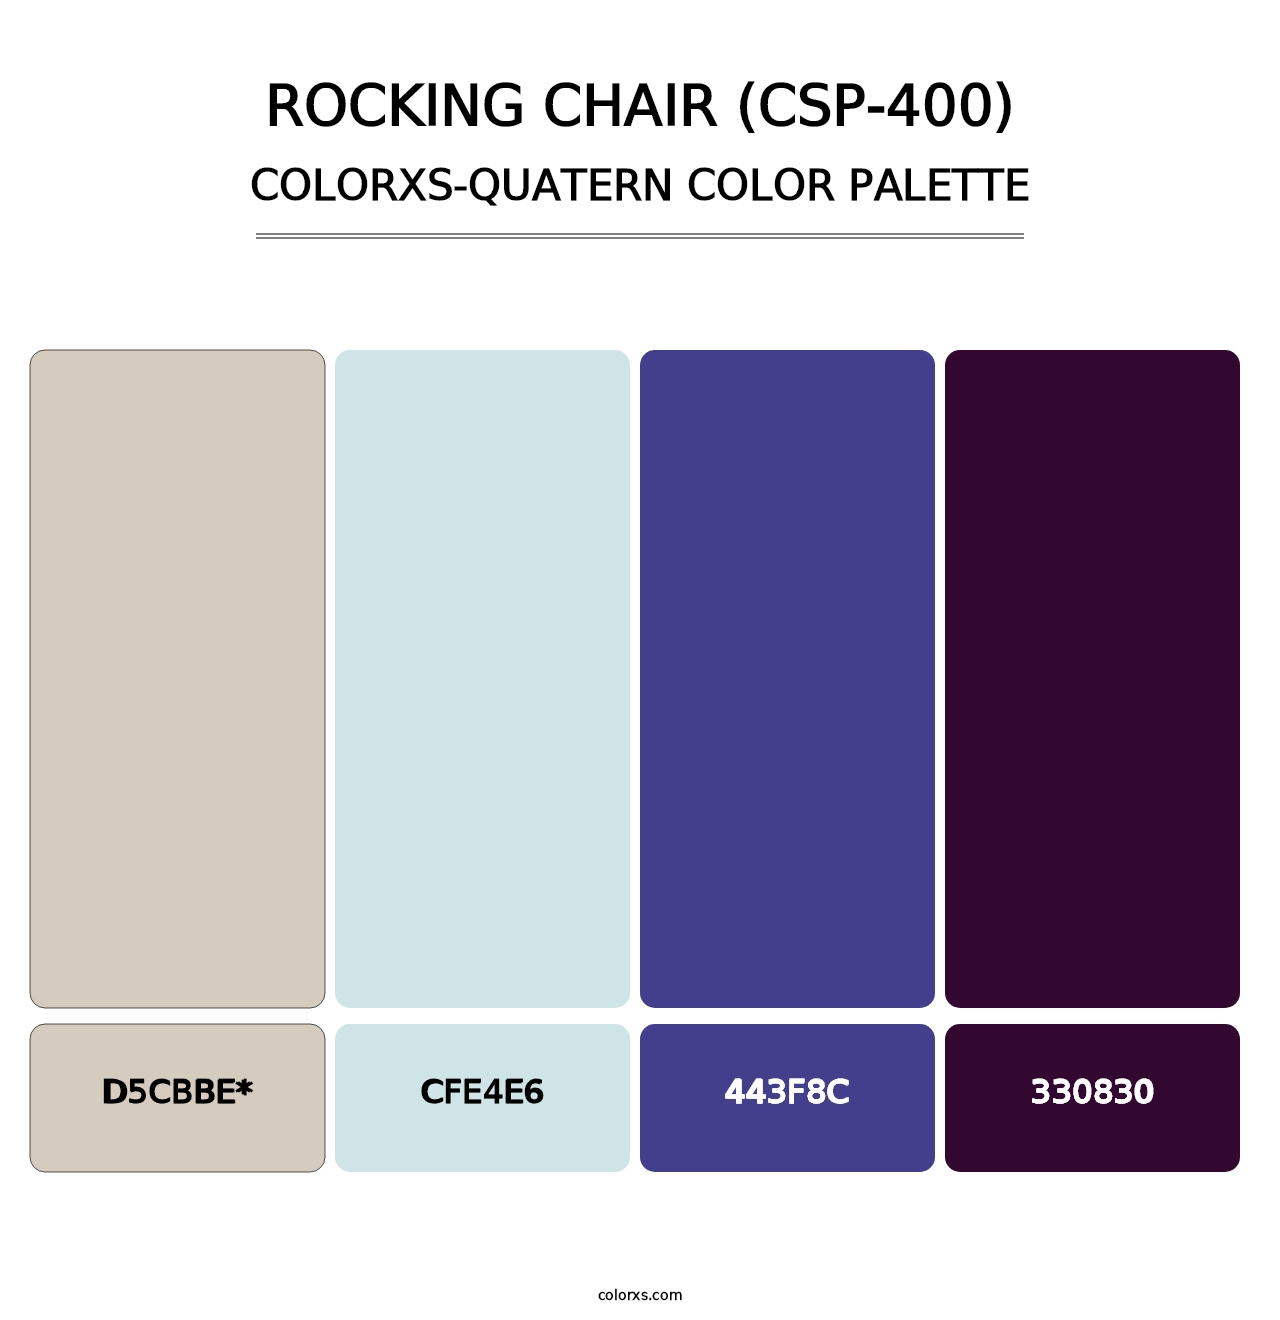 Rocking Chair (CSP-400) - Colorxs Quatern Palette